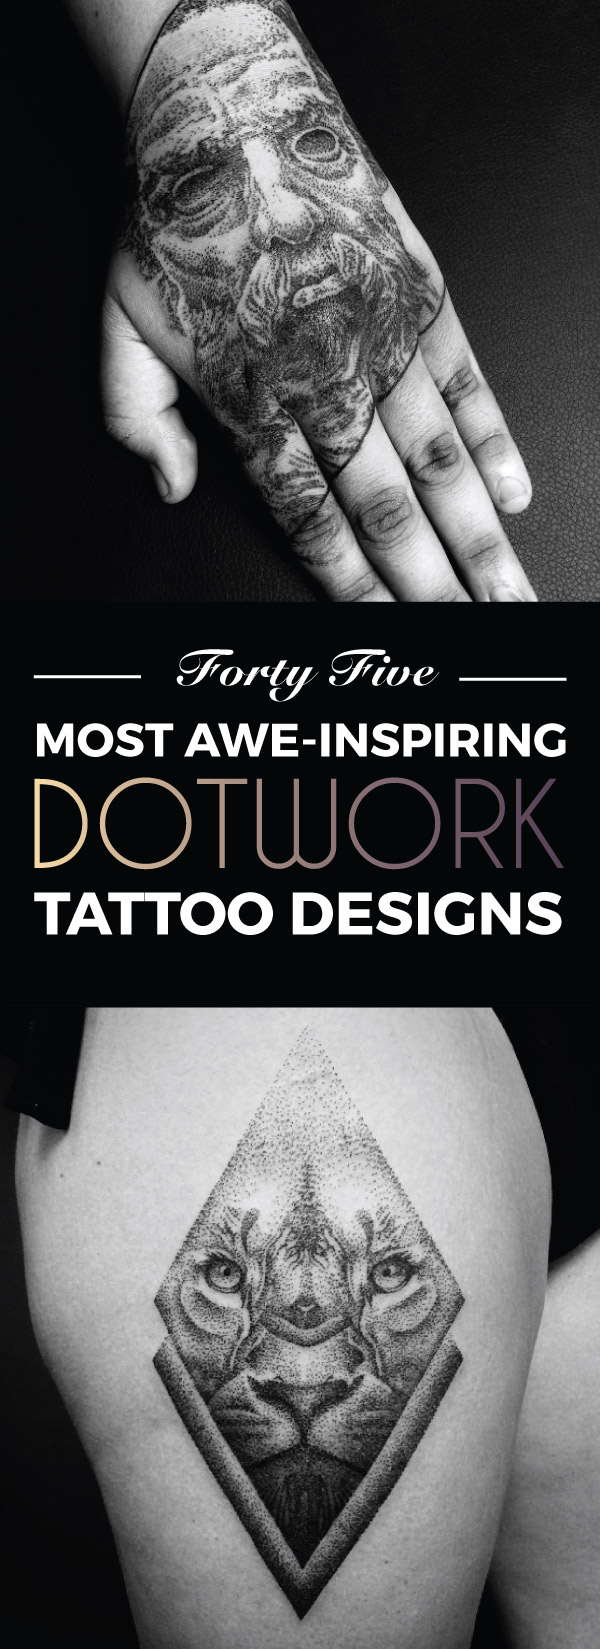 45 Most Awe-Inspiring Dotwork Tattoo Designs | TattooBlend